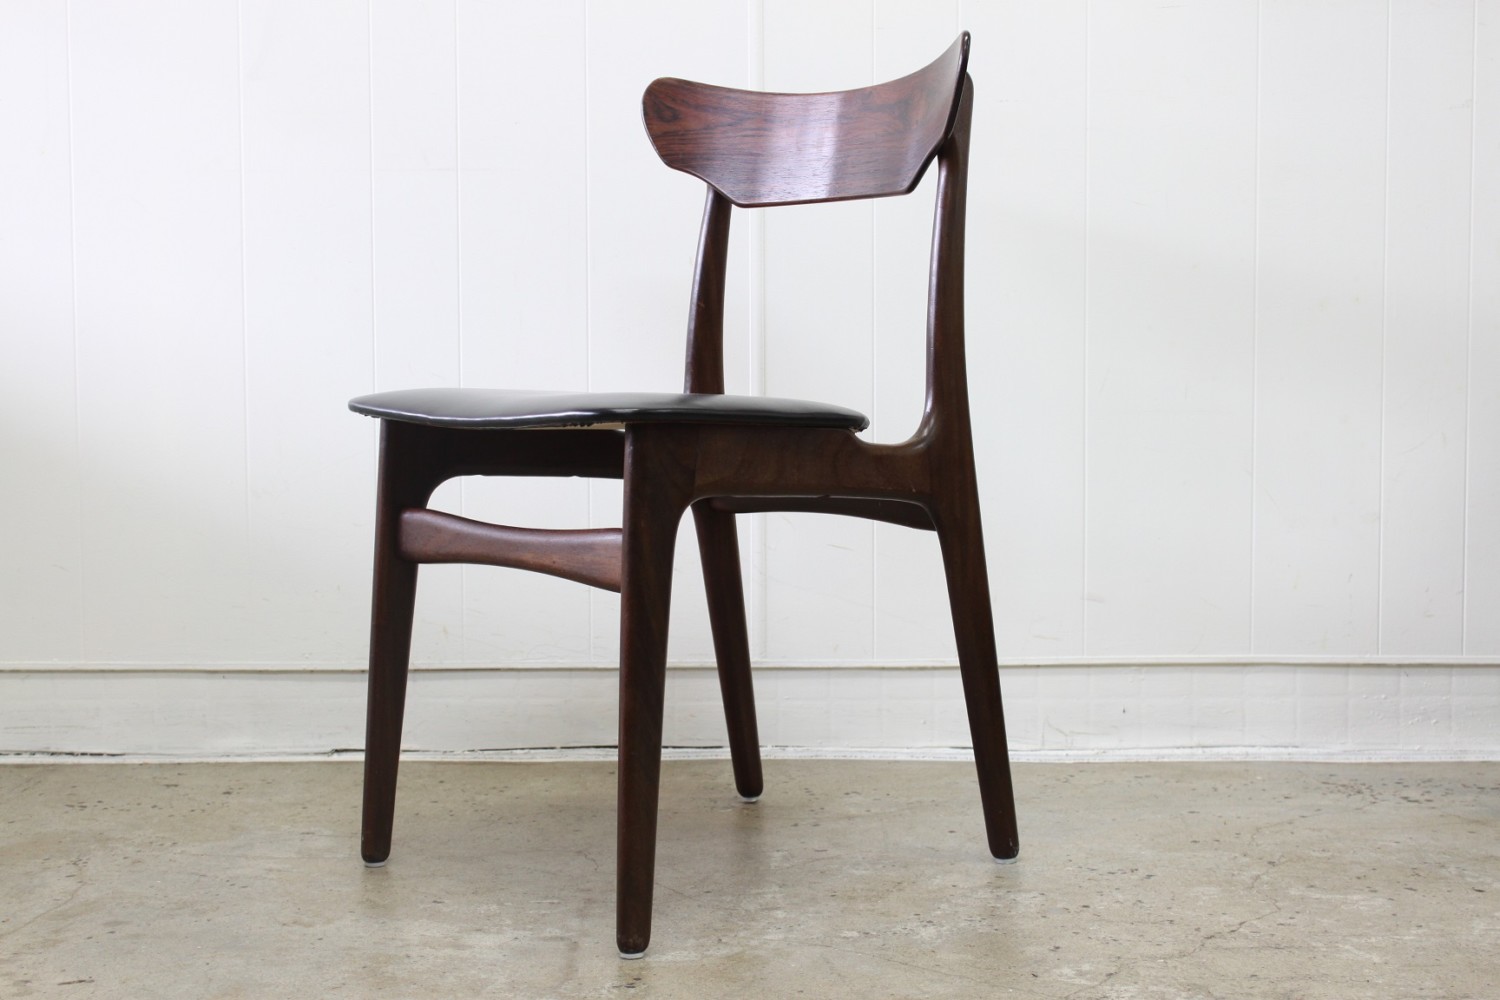 Danish Chairs by SchiØnning